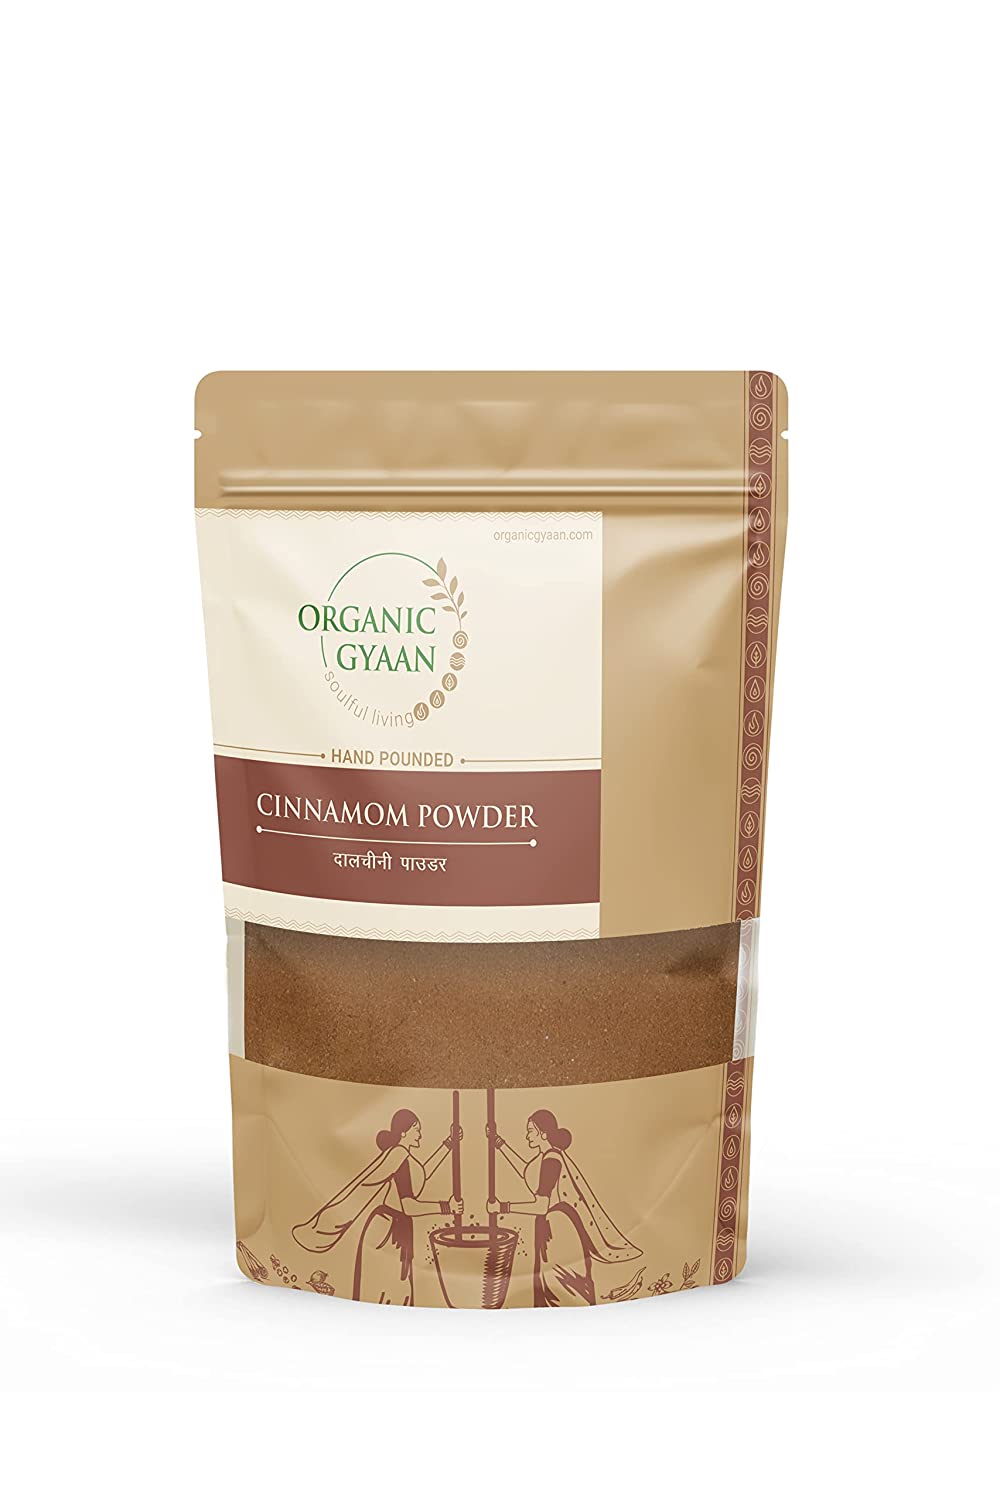 Organic Gyaan Organic Dalchini Powder / Cinnamon Powder 100gm